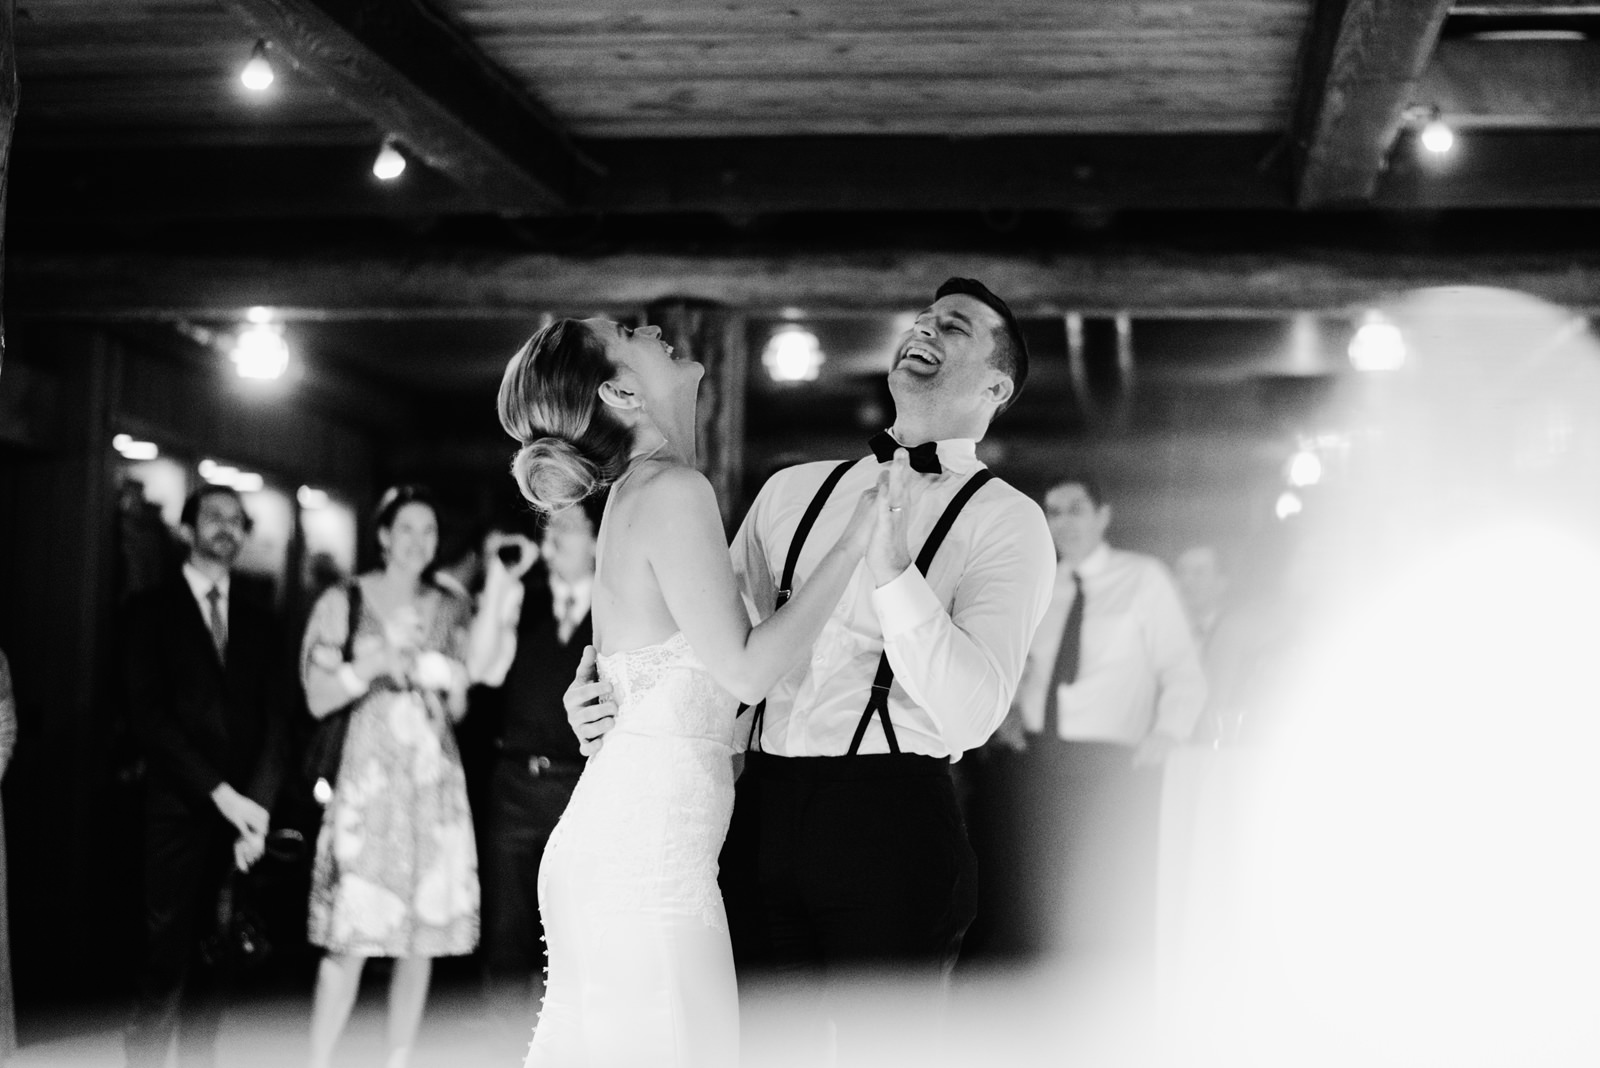 045-photojournalistic-photo-of-bride-and-groom-s-joyful-first-dance-by-ryan-flynn.jpg